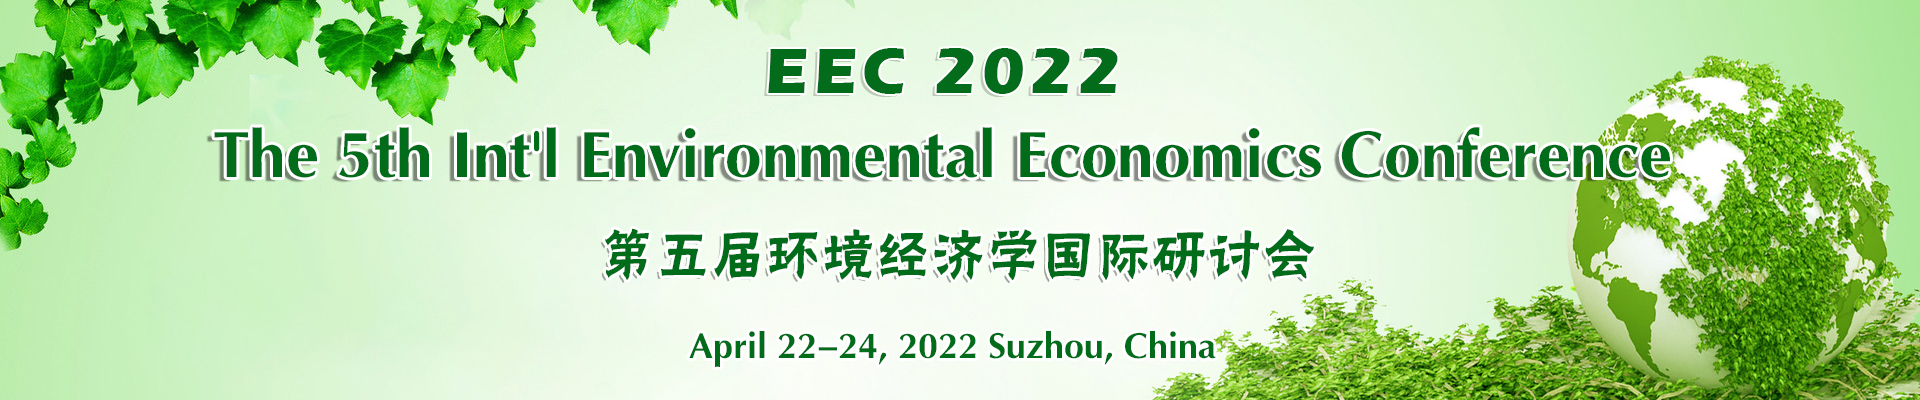 The 5th Int'l Environmental Economics Conference (EEC 2022), Suzhou, Jiangsu, China